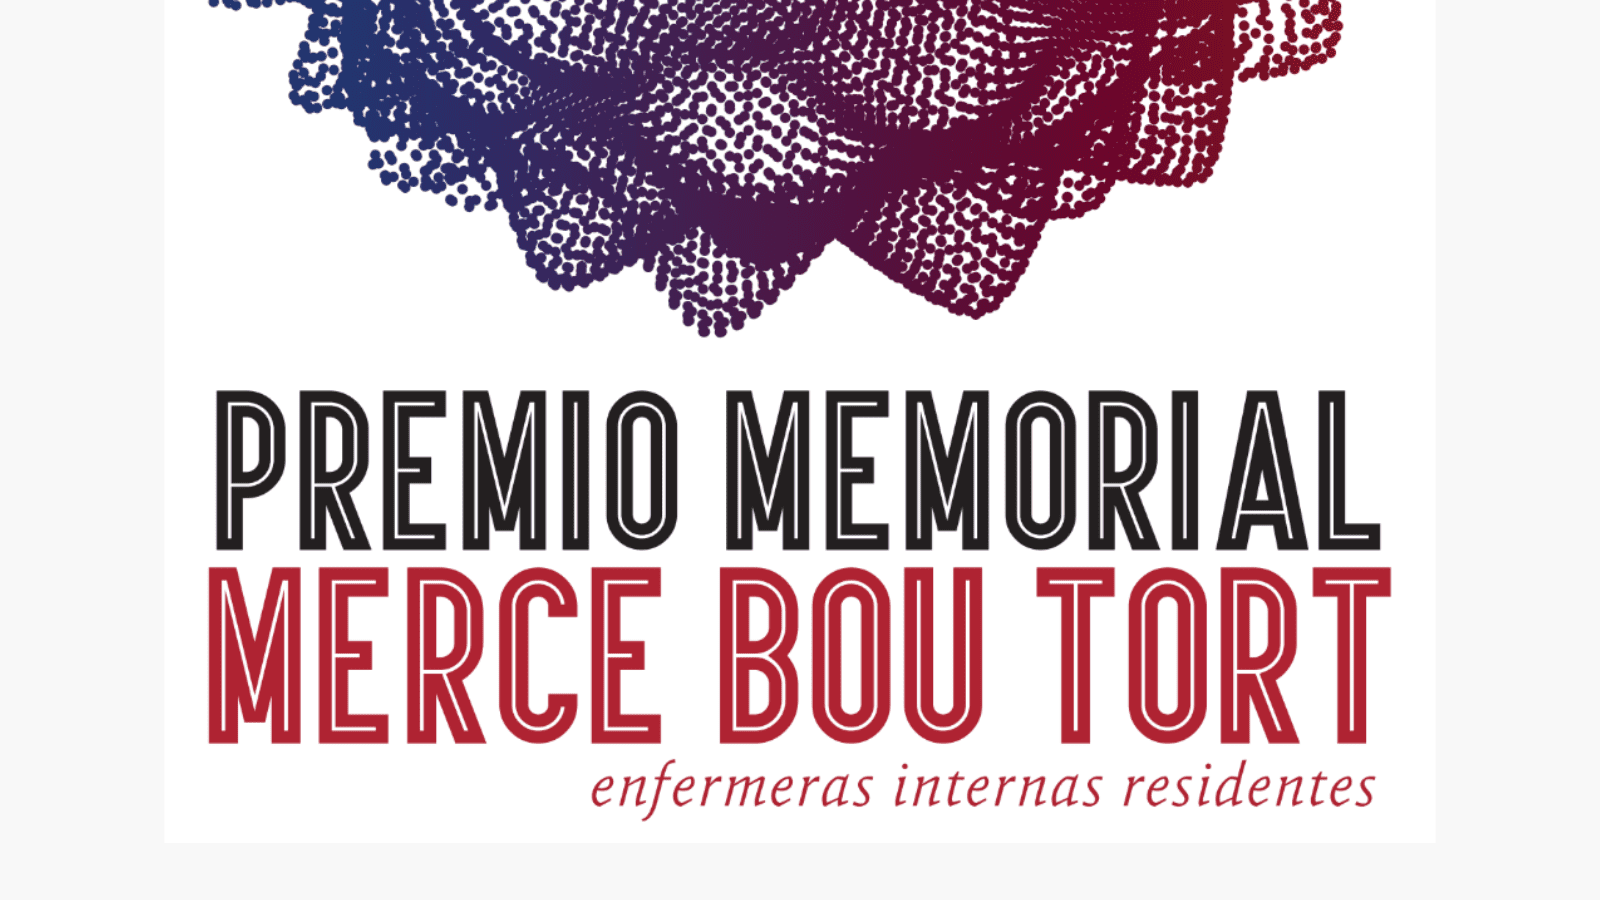 Premio Memorial Mercè Bou Tort enfermeras internas residentes